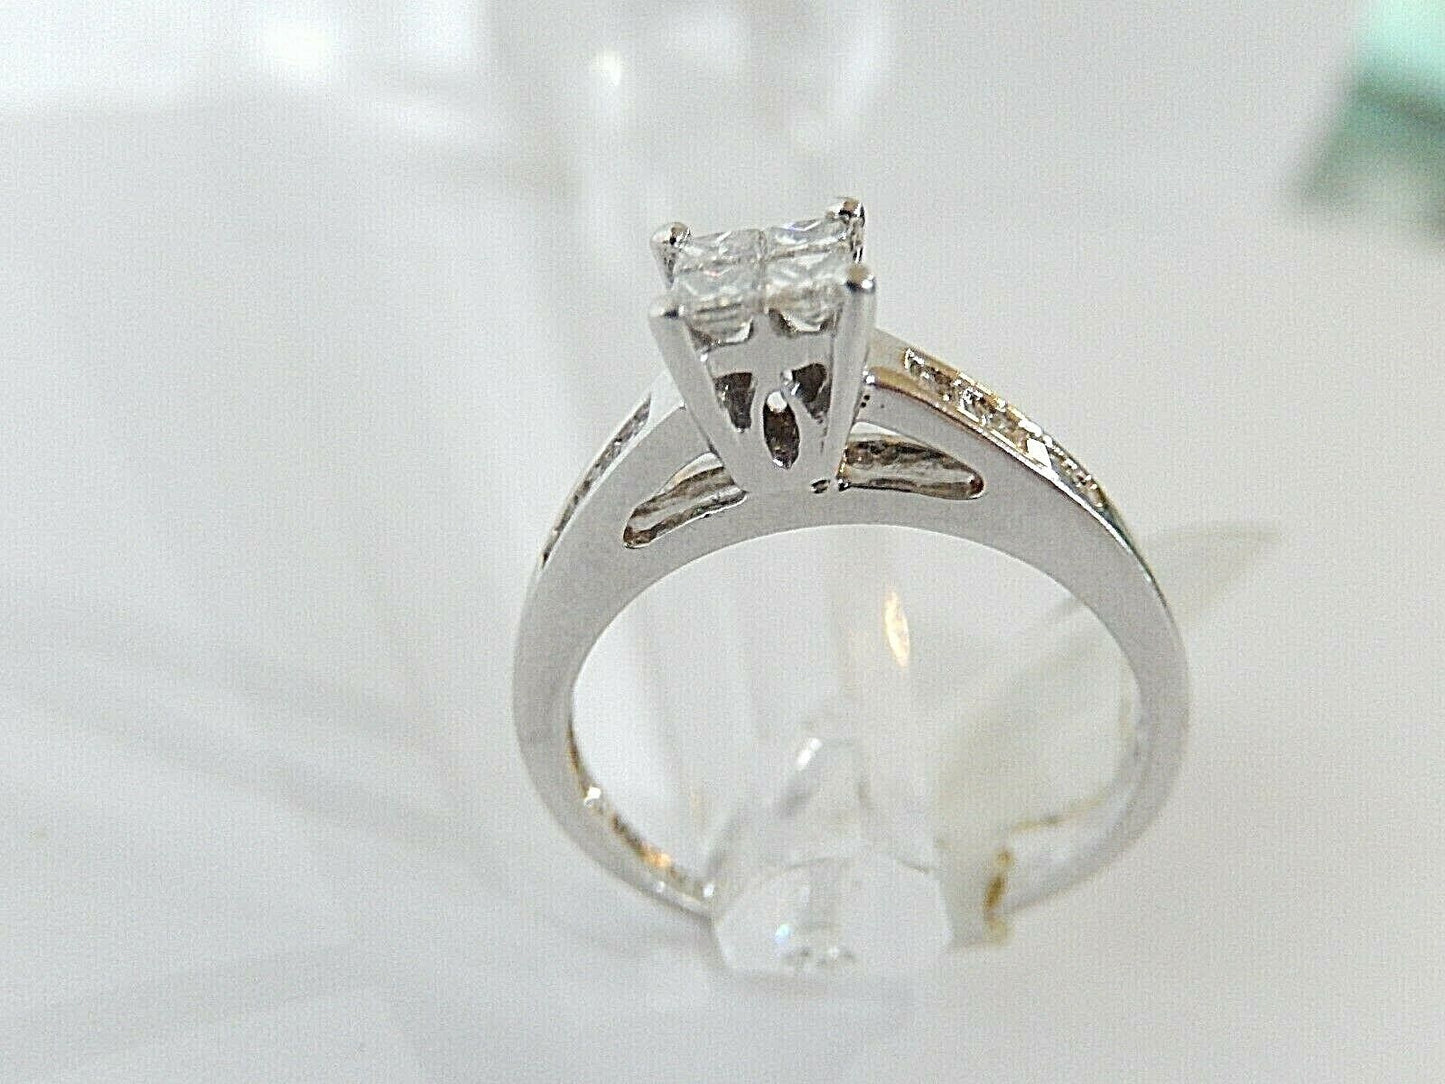 14k White Gold Princess Cut & Baguette Natural Diamond Engagement Ring Size 6.75